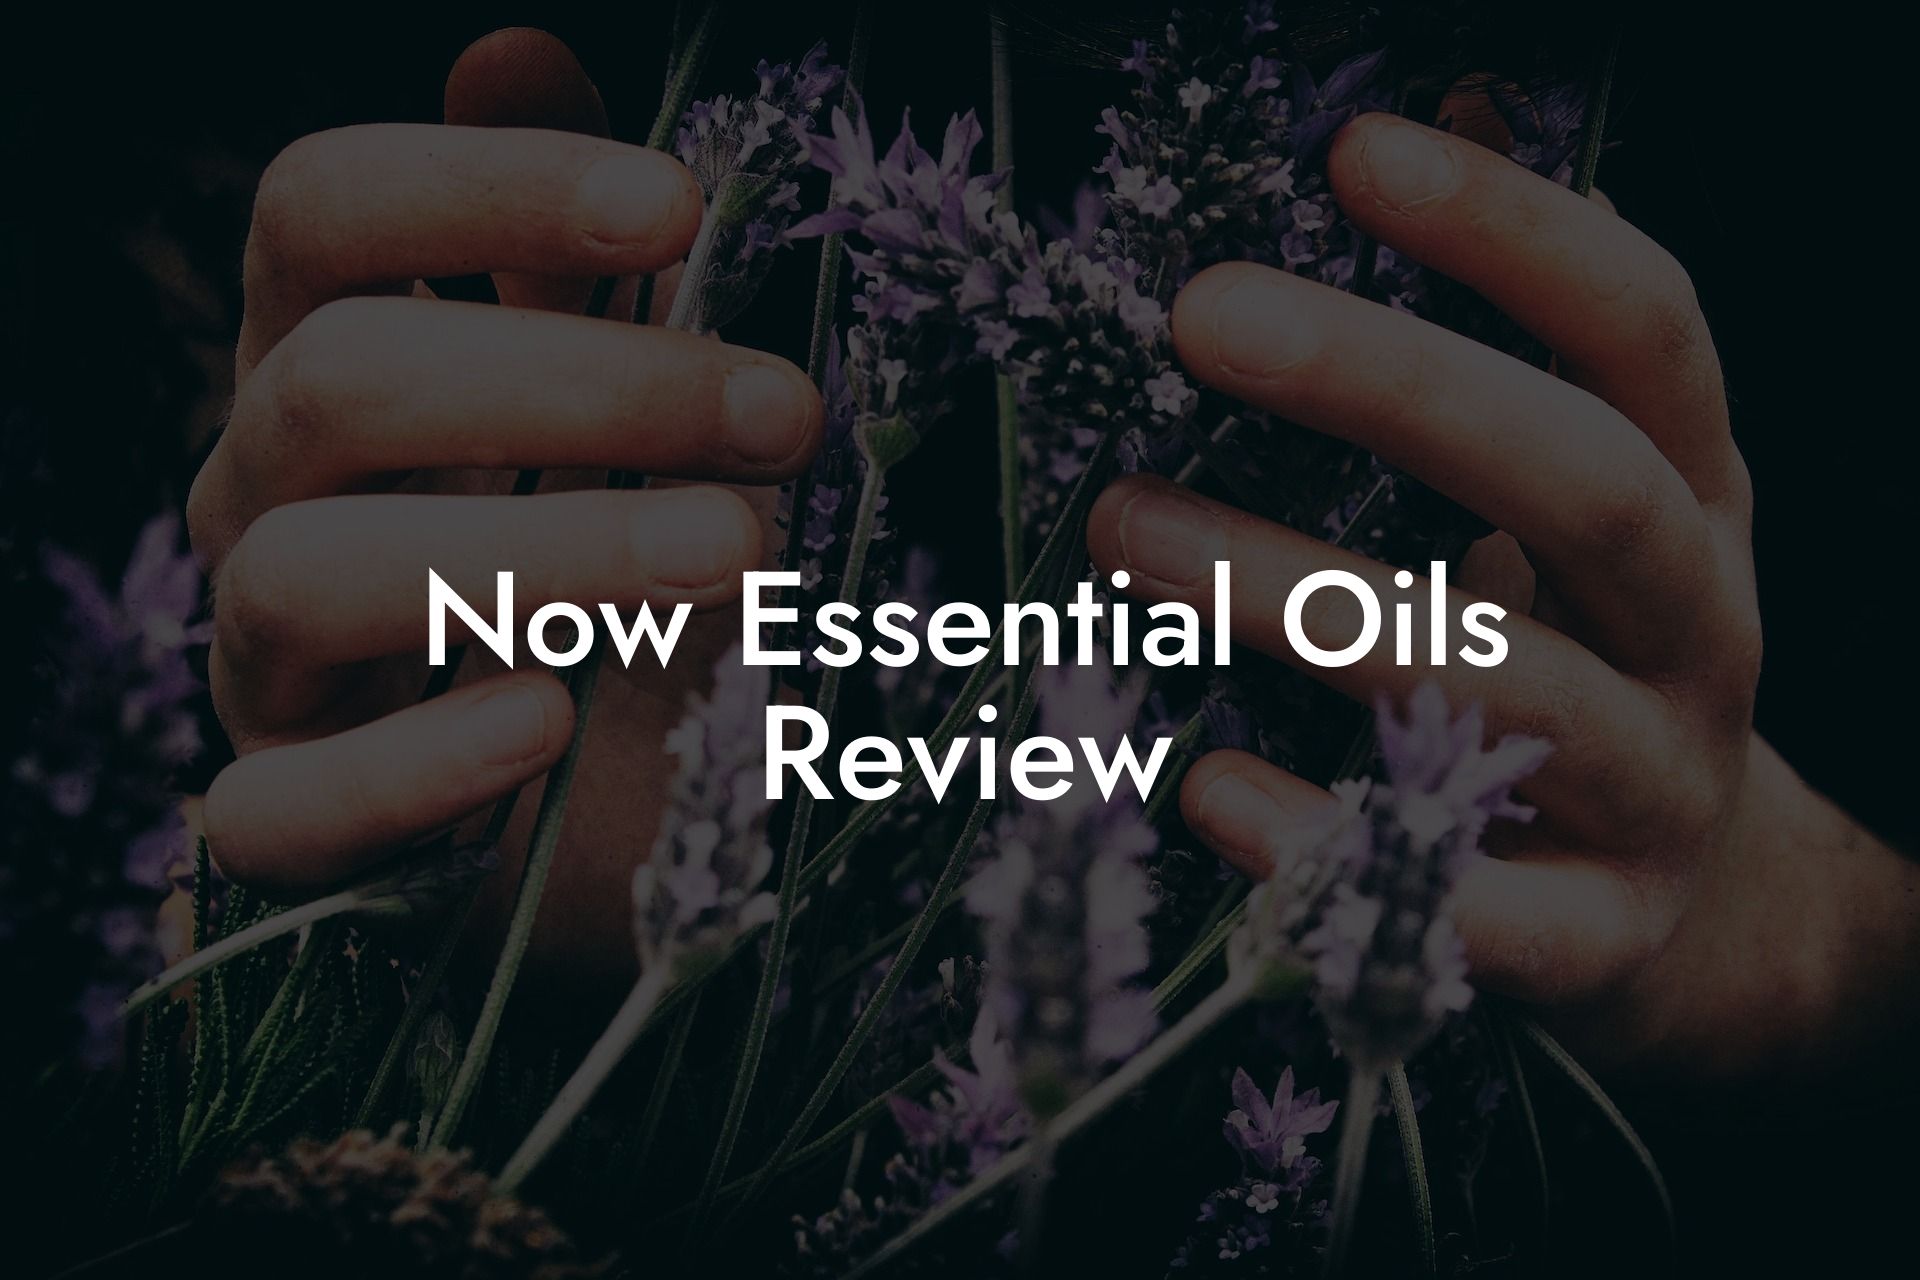 Now Essential Oils Review